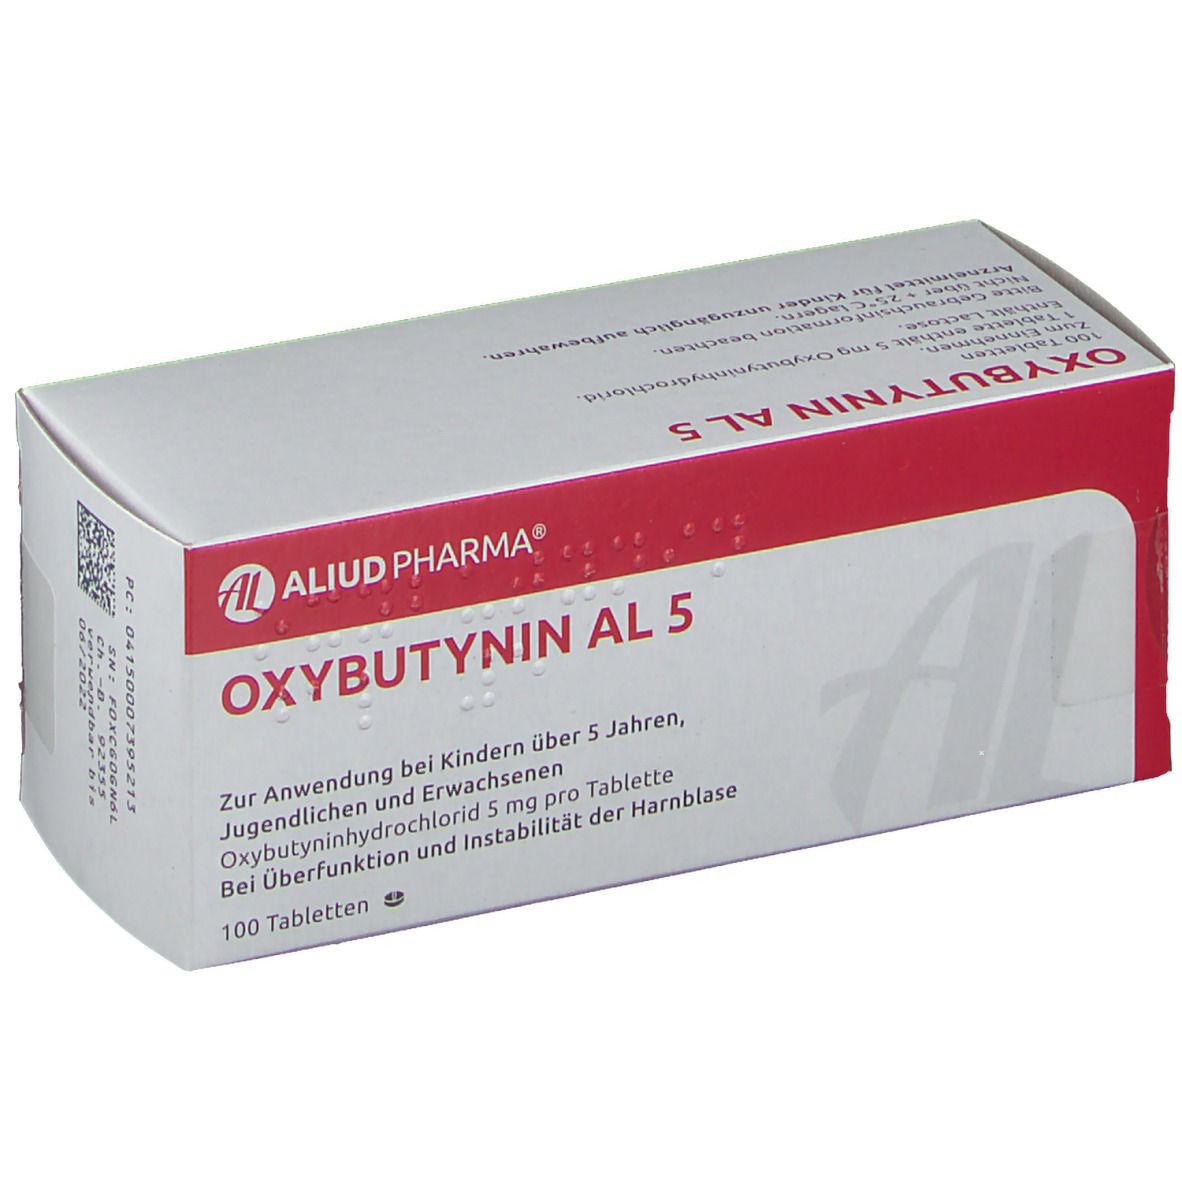 Oxybutynin AL 5